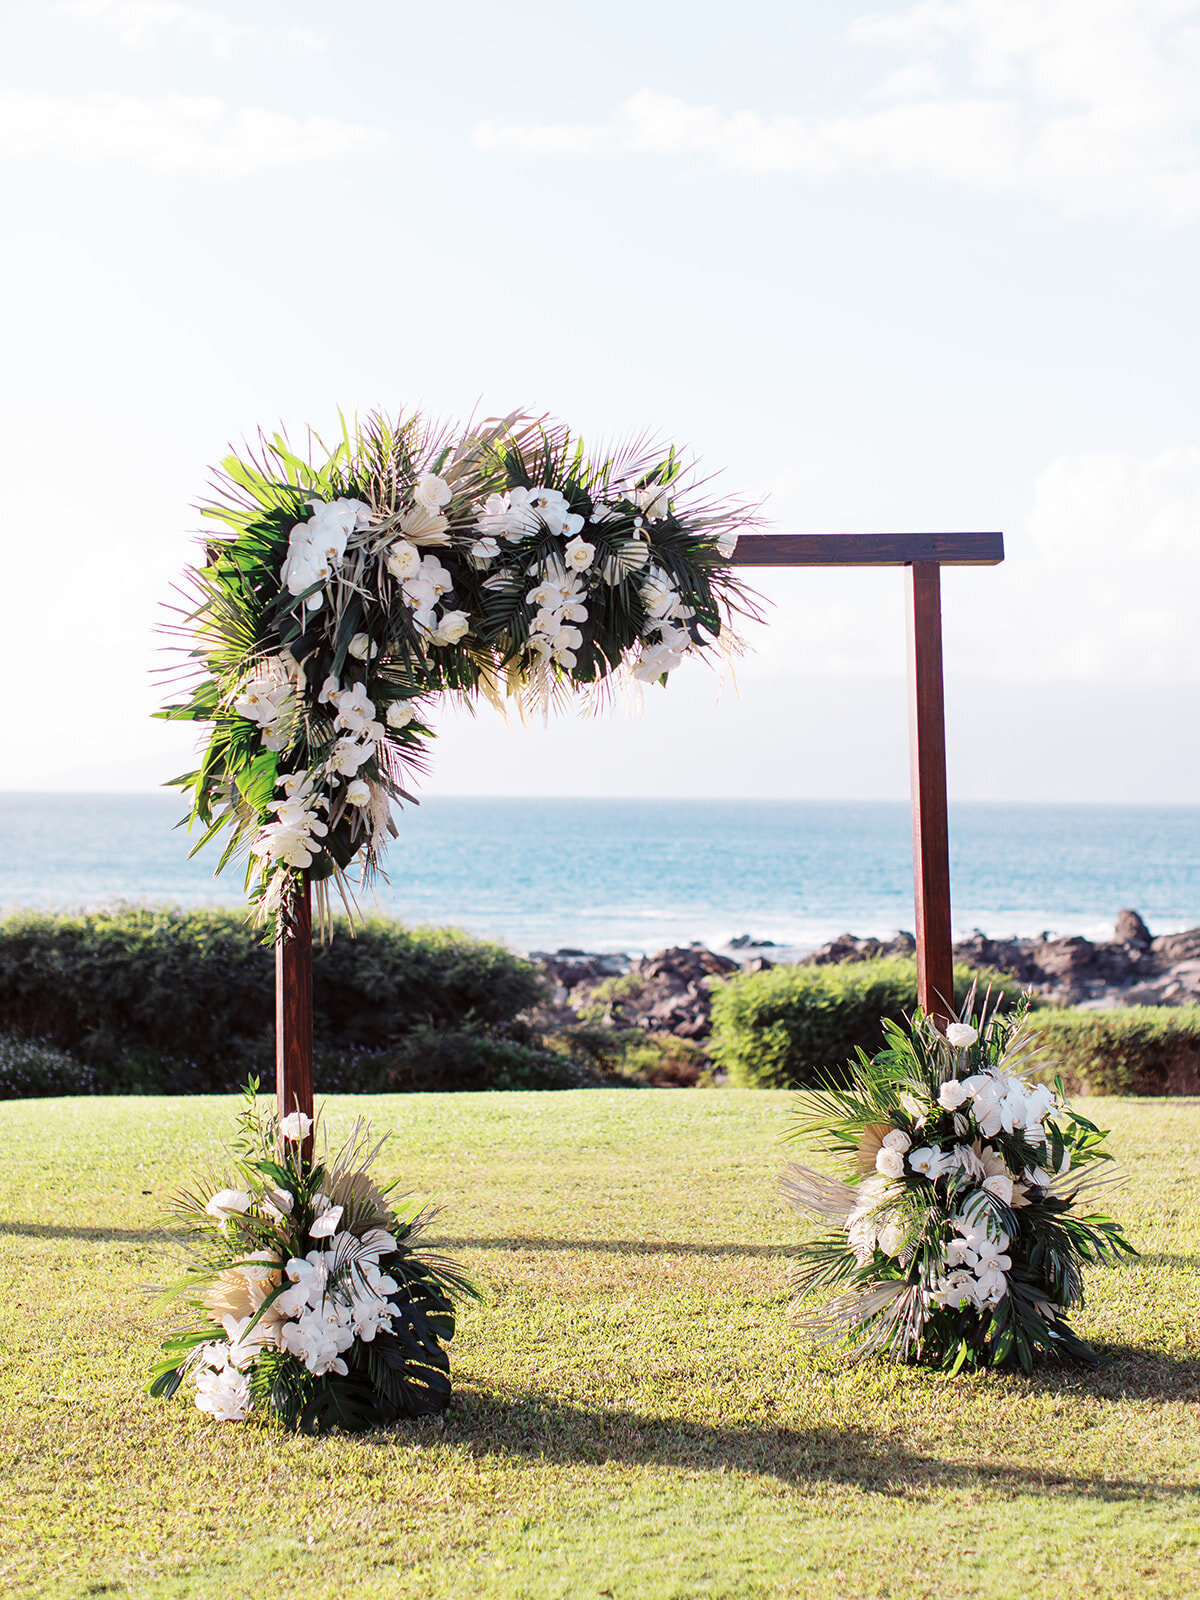 Maui Love Weddings and Events Maui Hawaii Full Service Wedding Planning Coordinating Event Design Company Destination Wedding 15